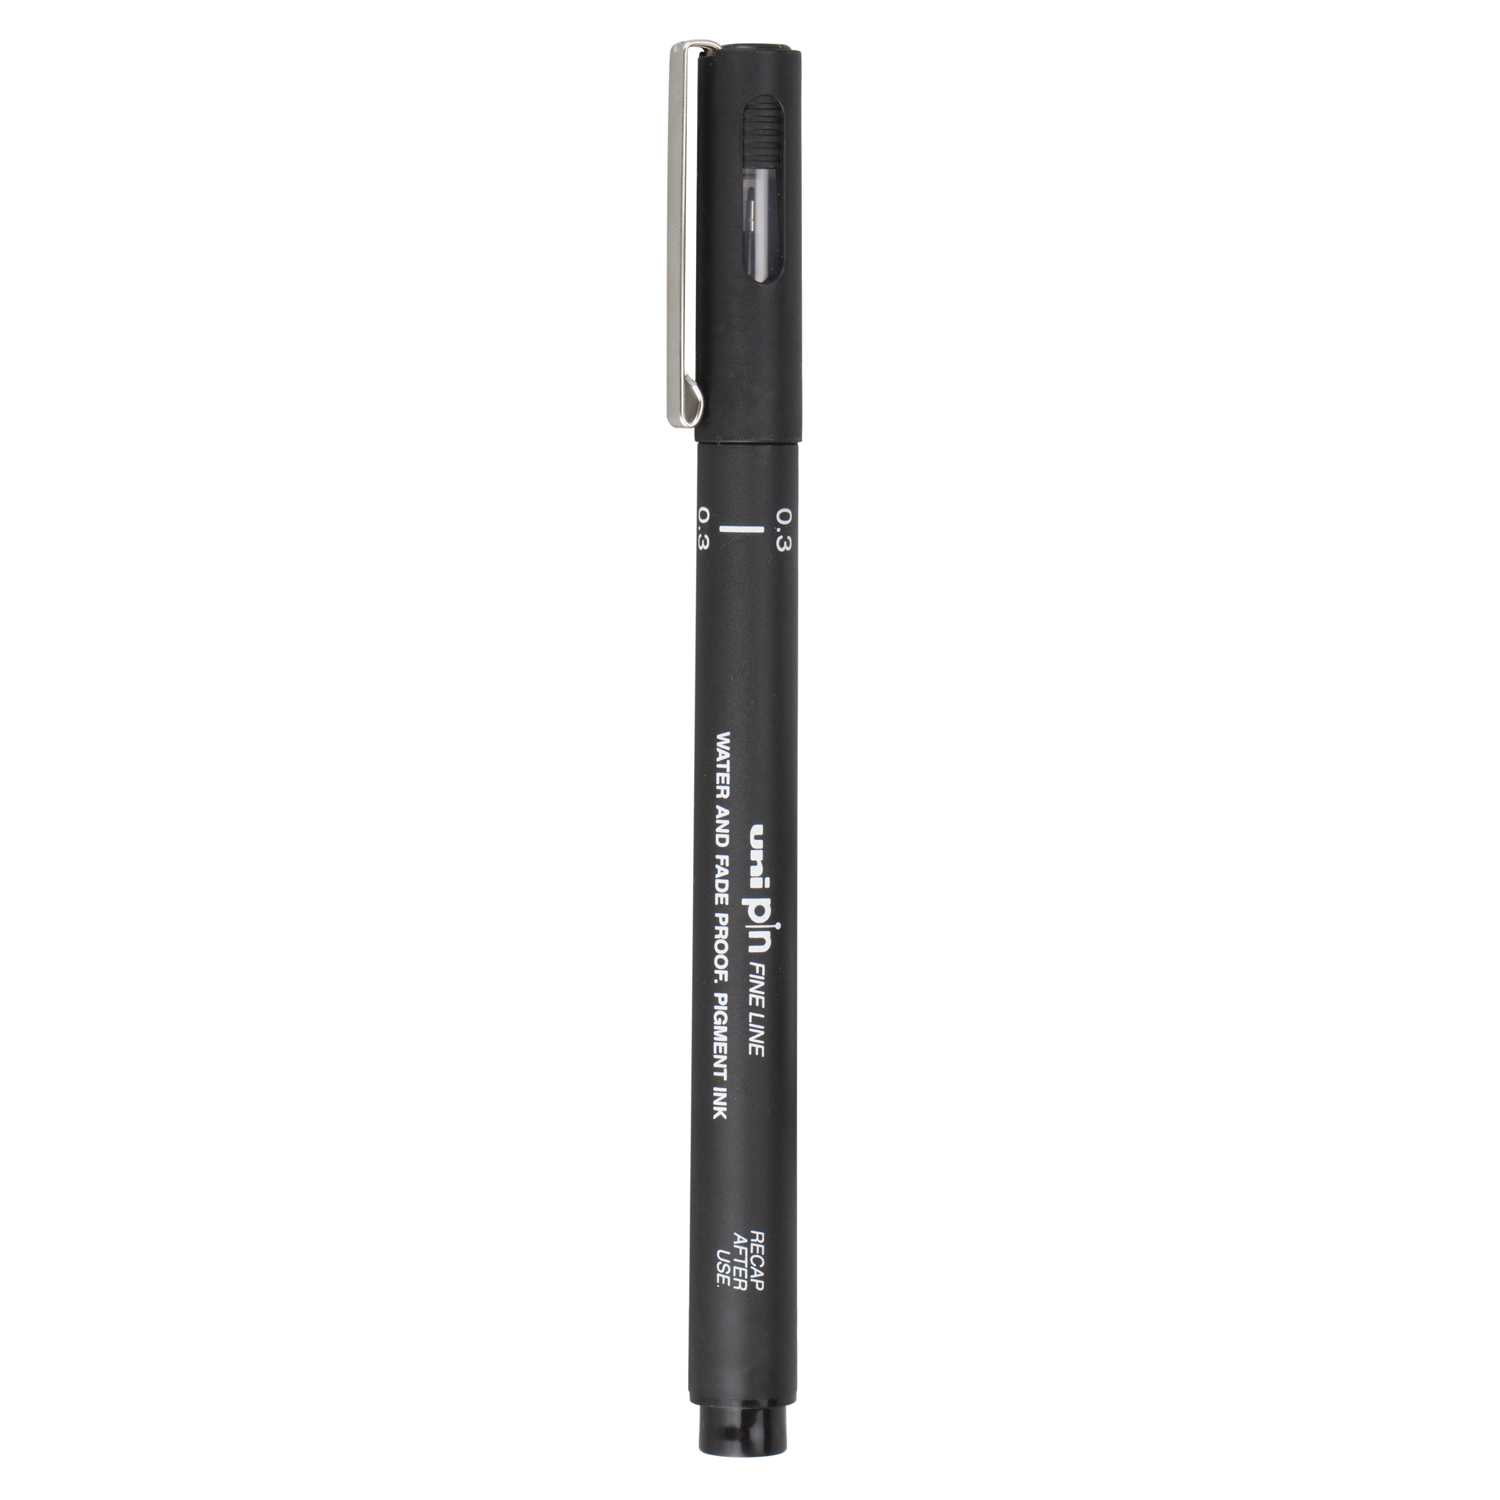 Uniball Pin Fine Liner Drawing Pen - Black / 0.3mm Image 1